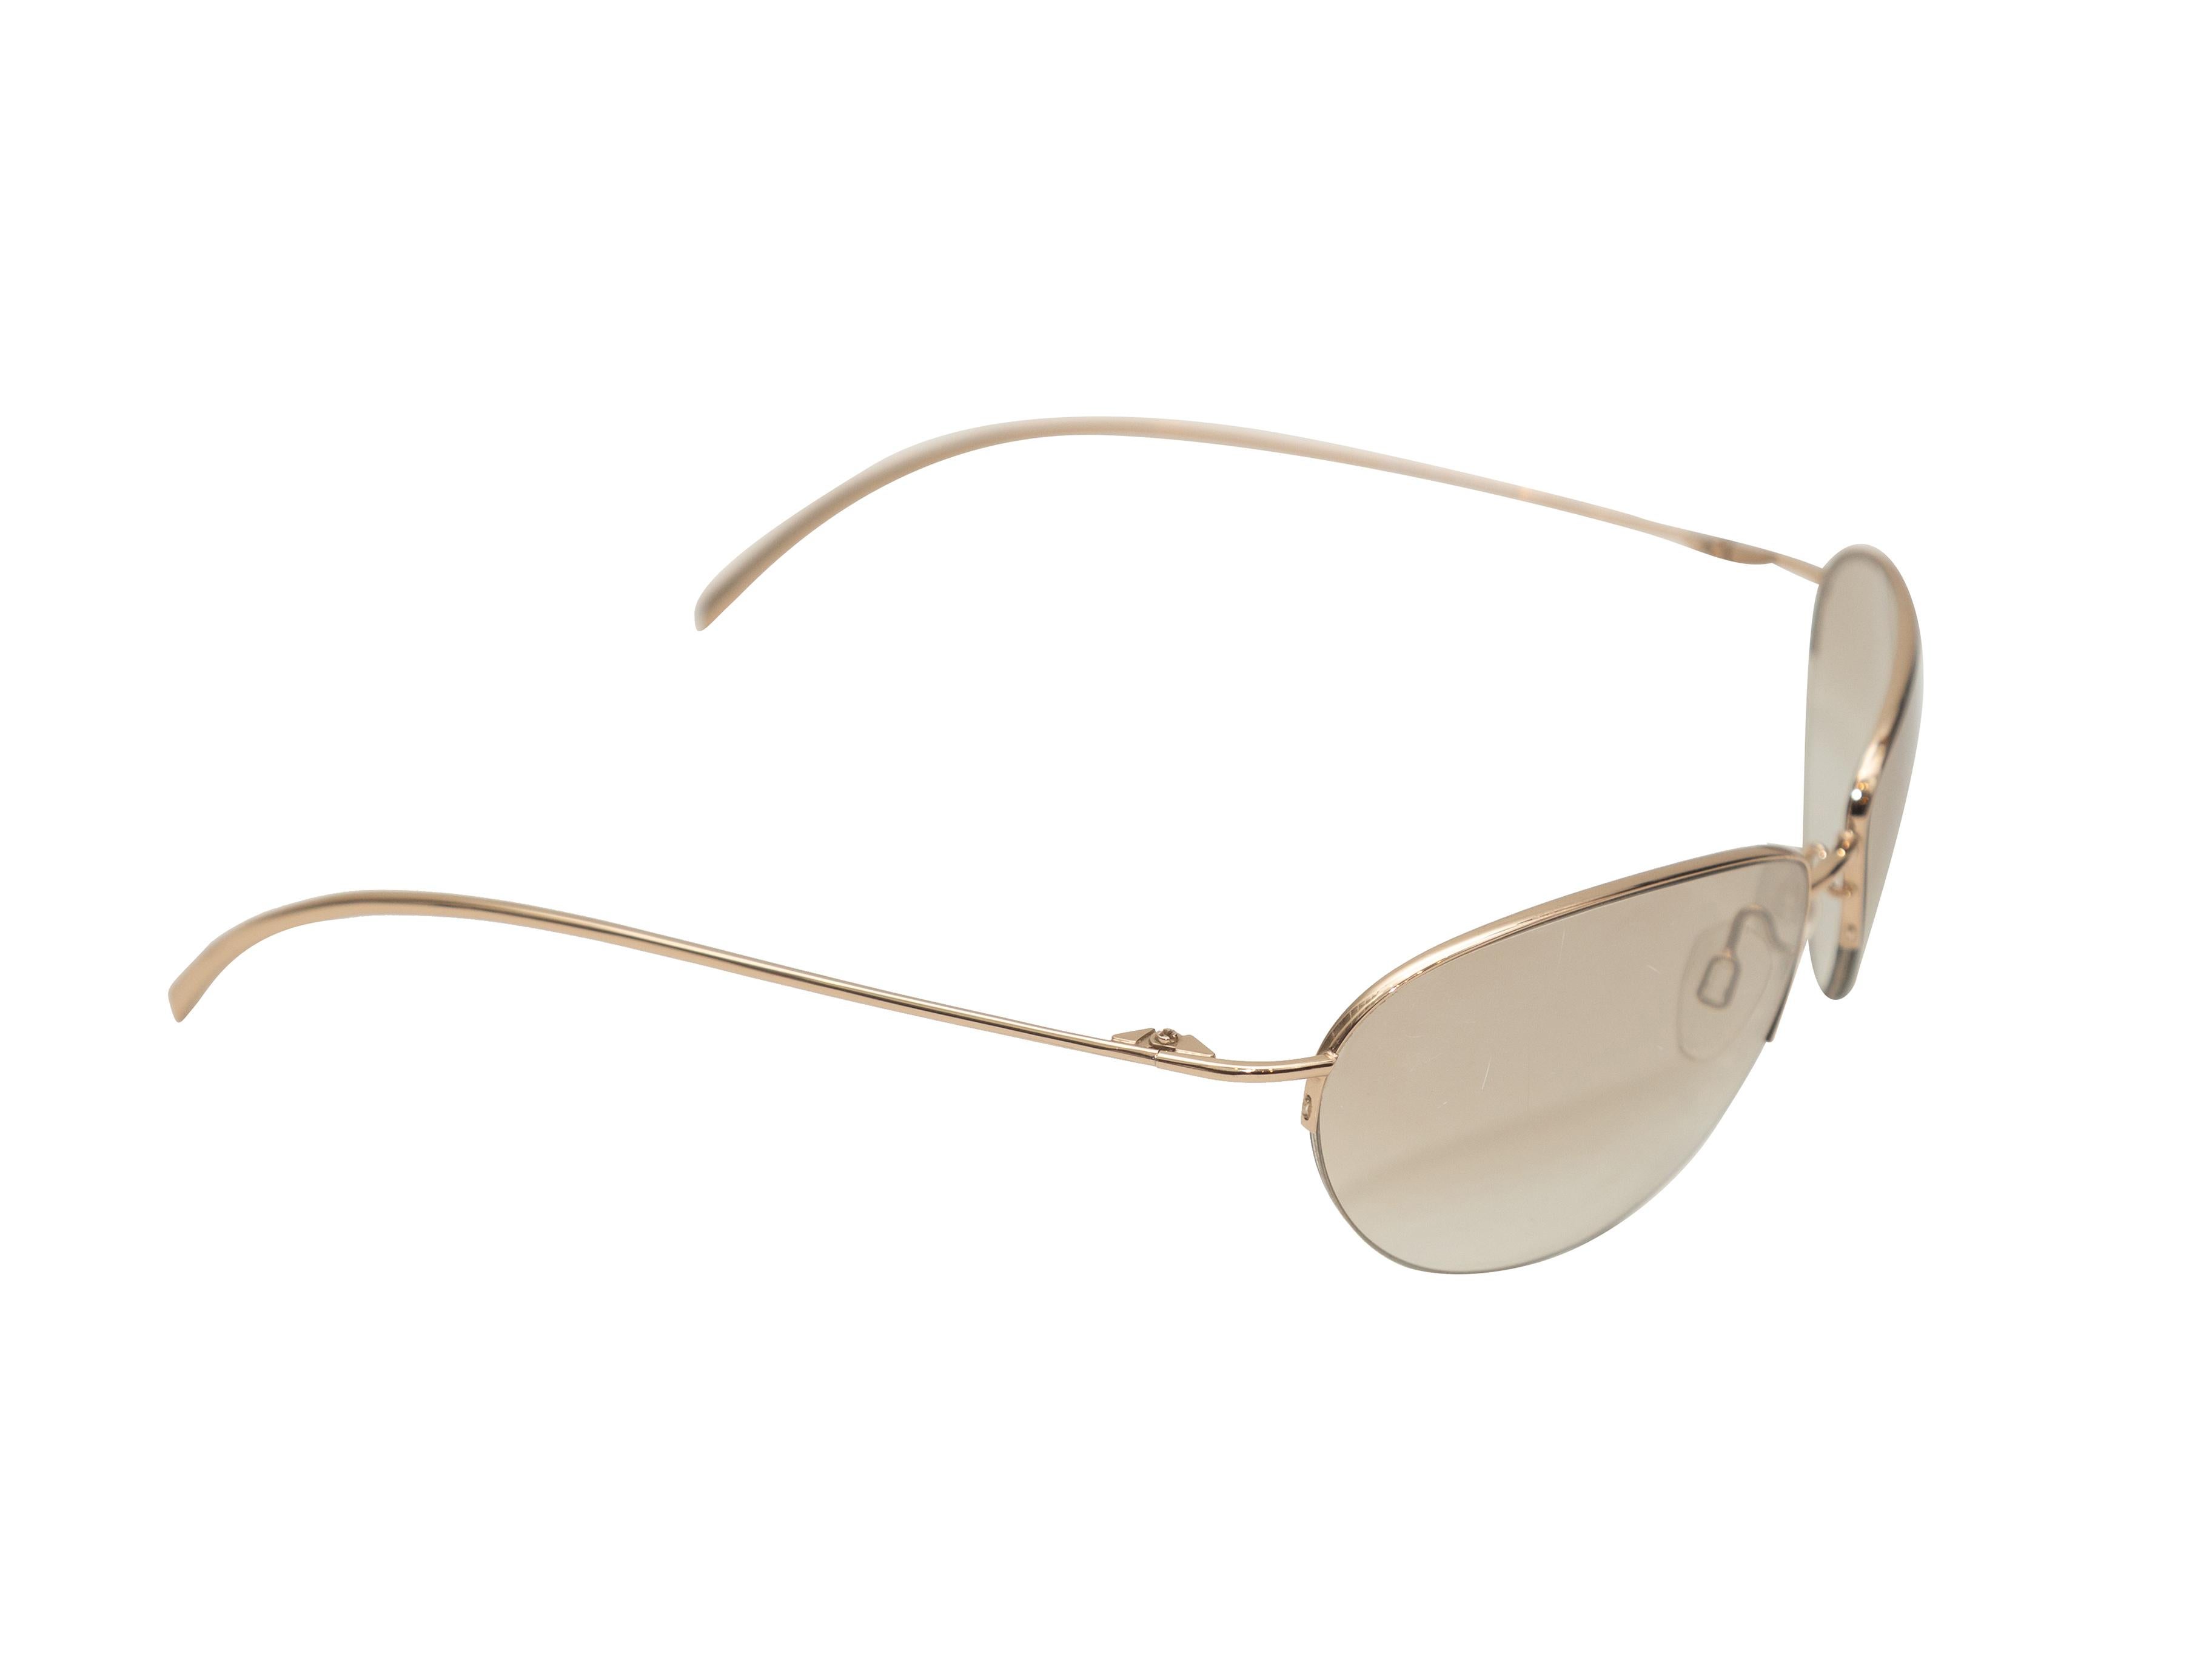 Product Details: Vintage gold metal sunglasses by Donna Karan. Brown tinted lenses. 1.5